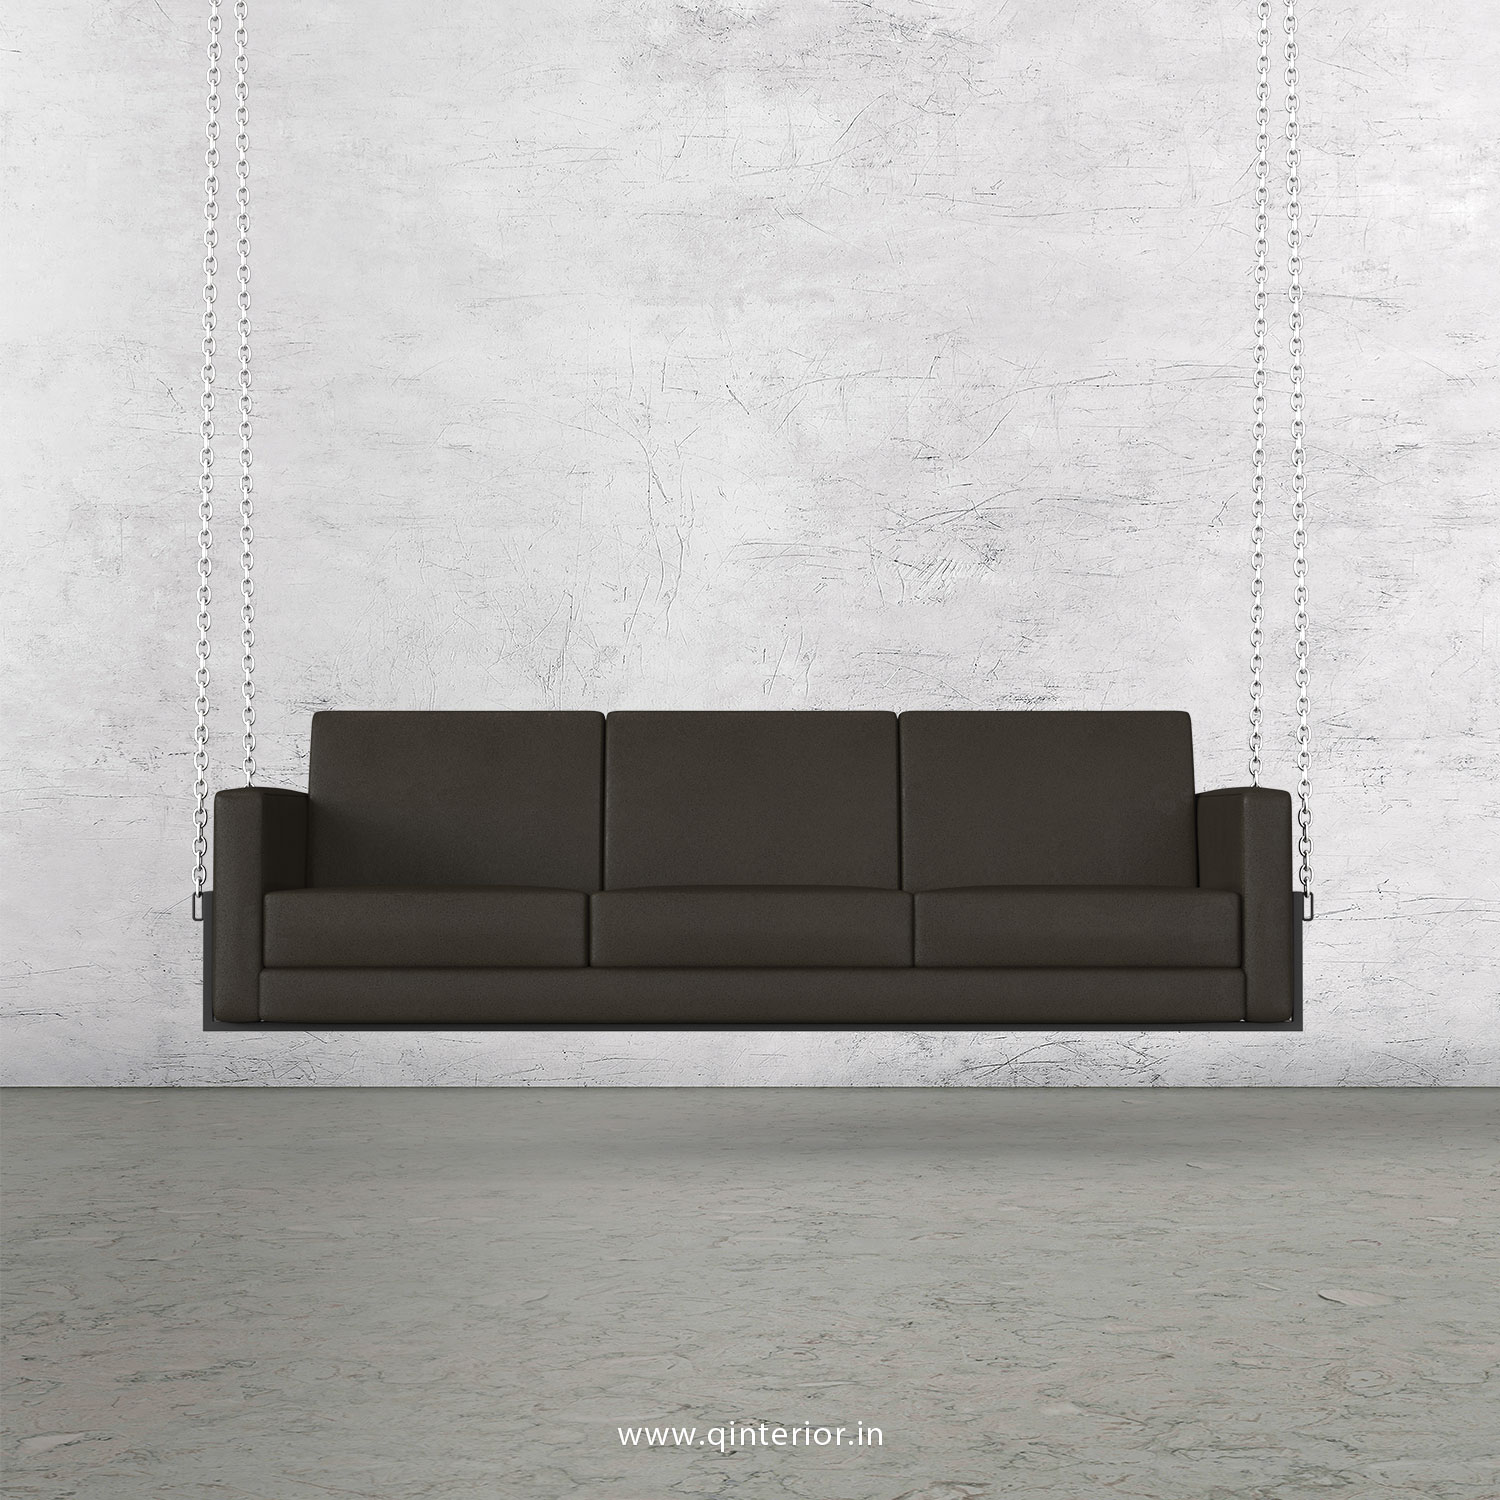 NIRVANA 3 Seater Swing Sofa in Fab Leather Fabric - SSF001 FL15